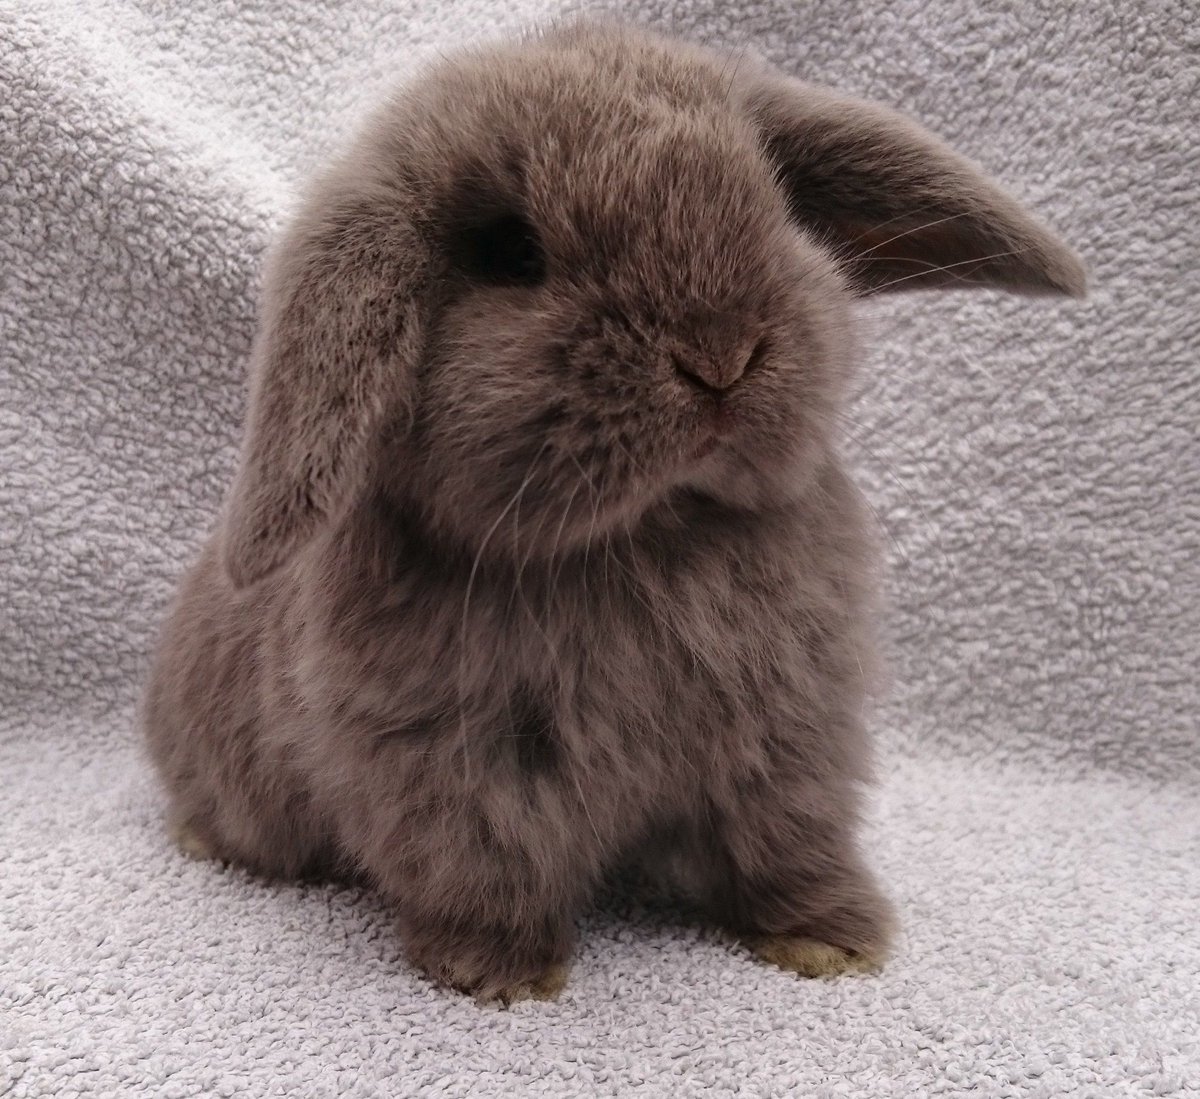  #winmetawin as bunnies: a devastating thread 